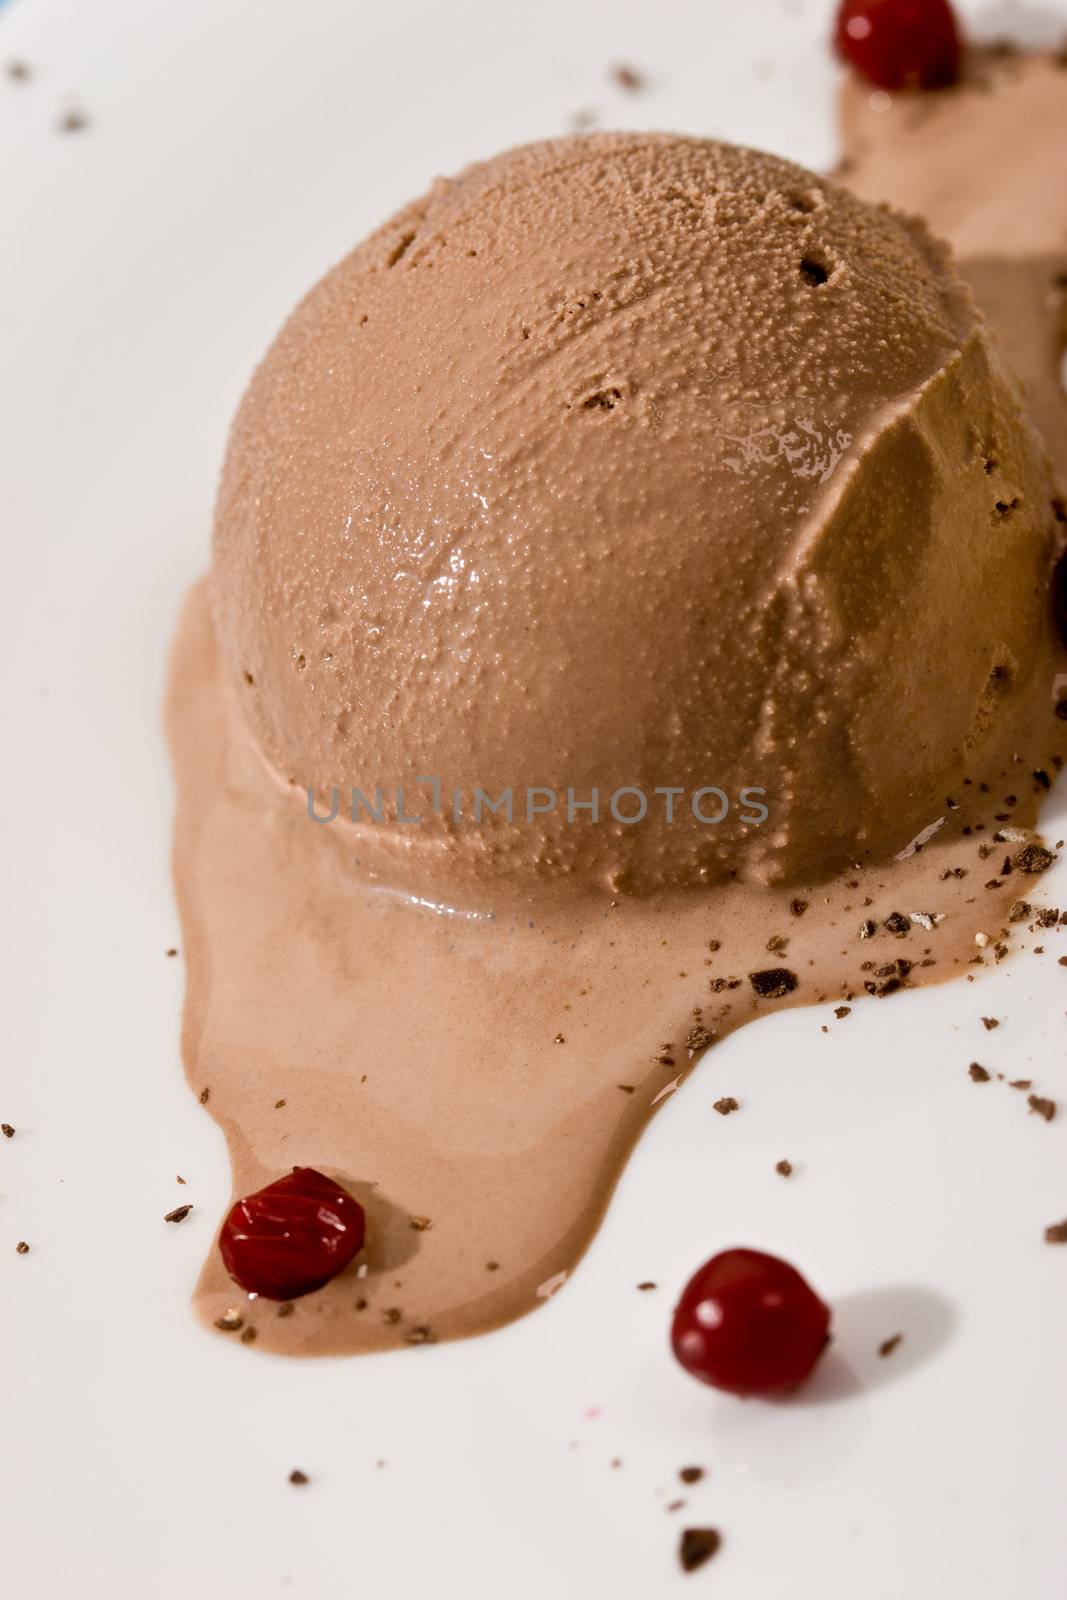 sweet series: chocolate ice cream with berry